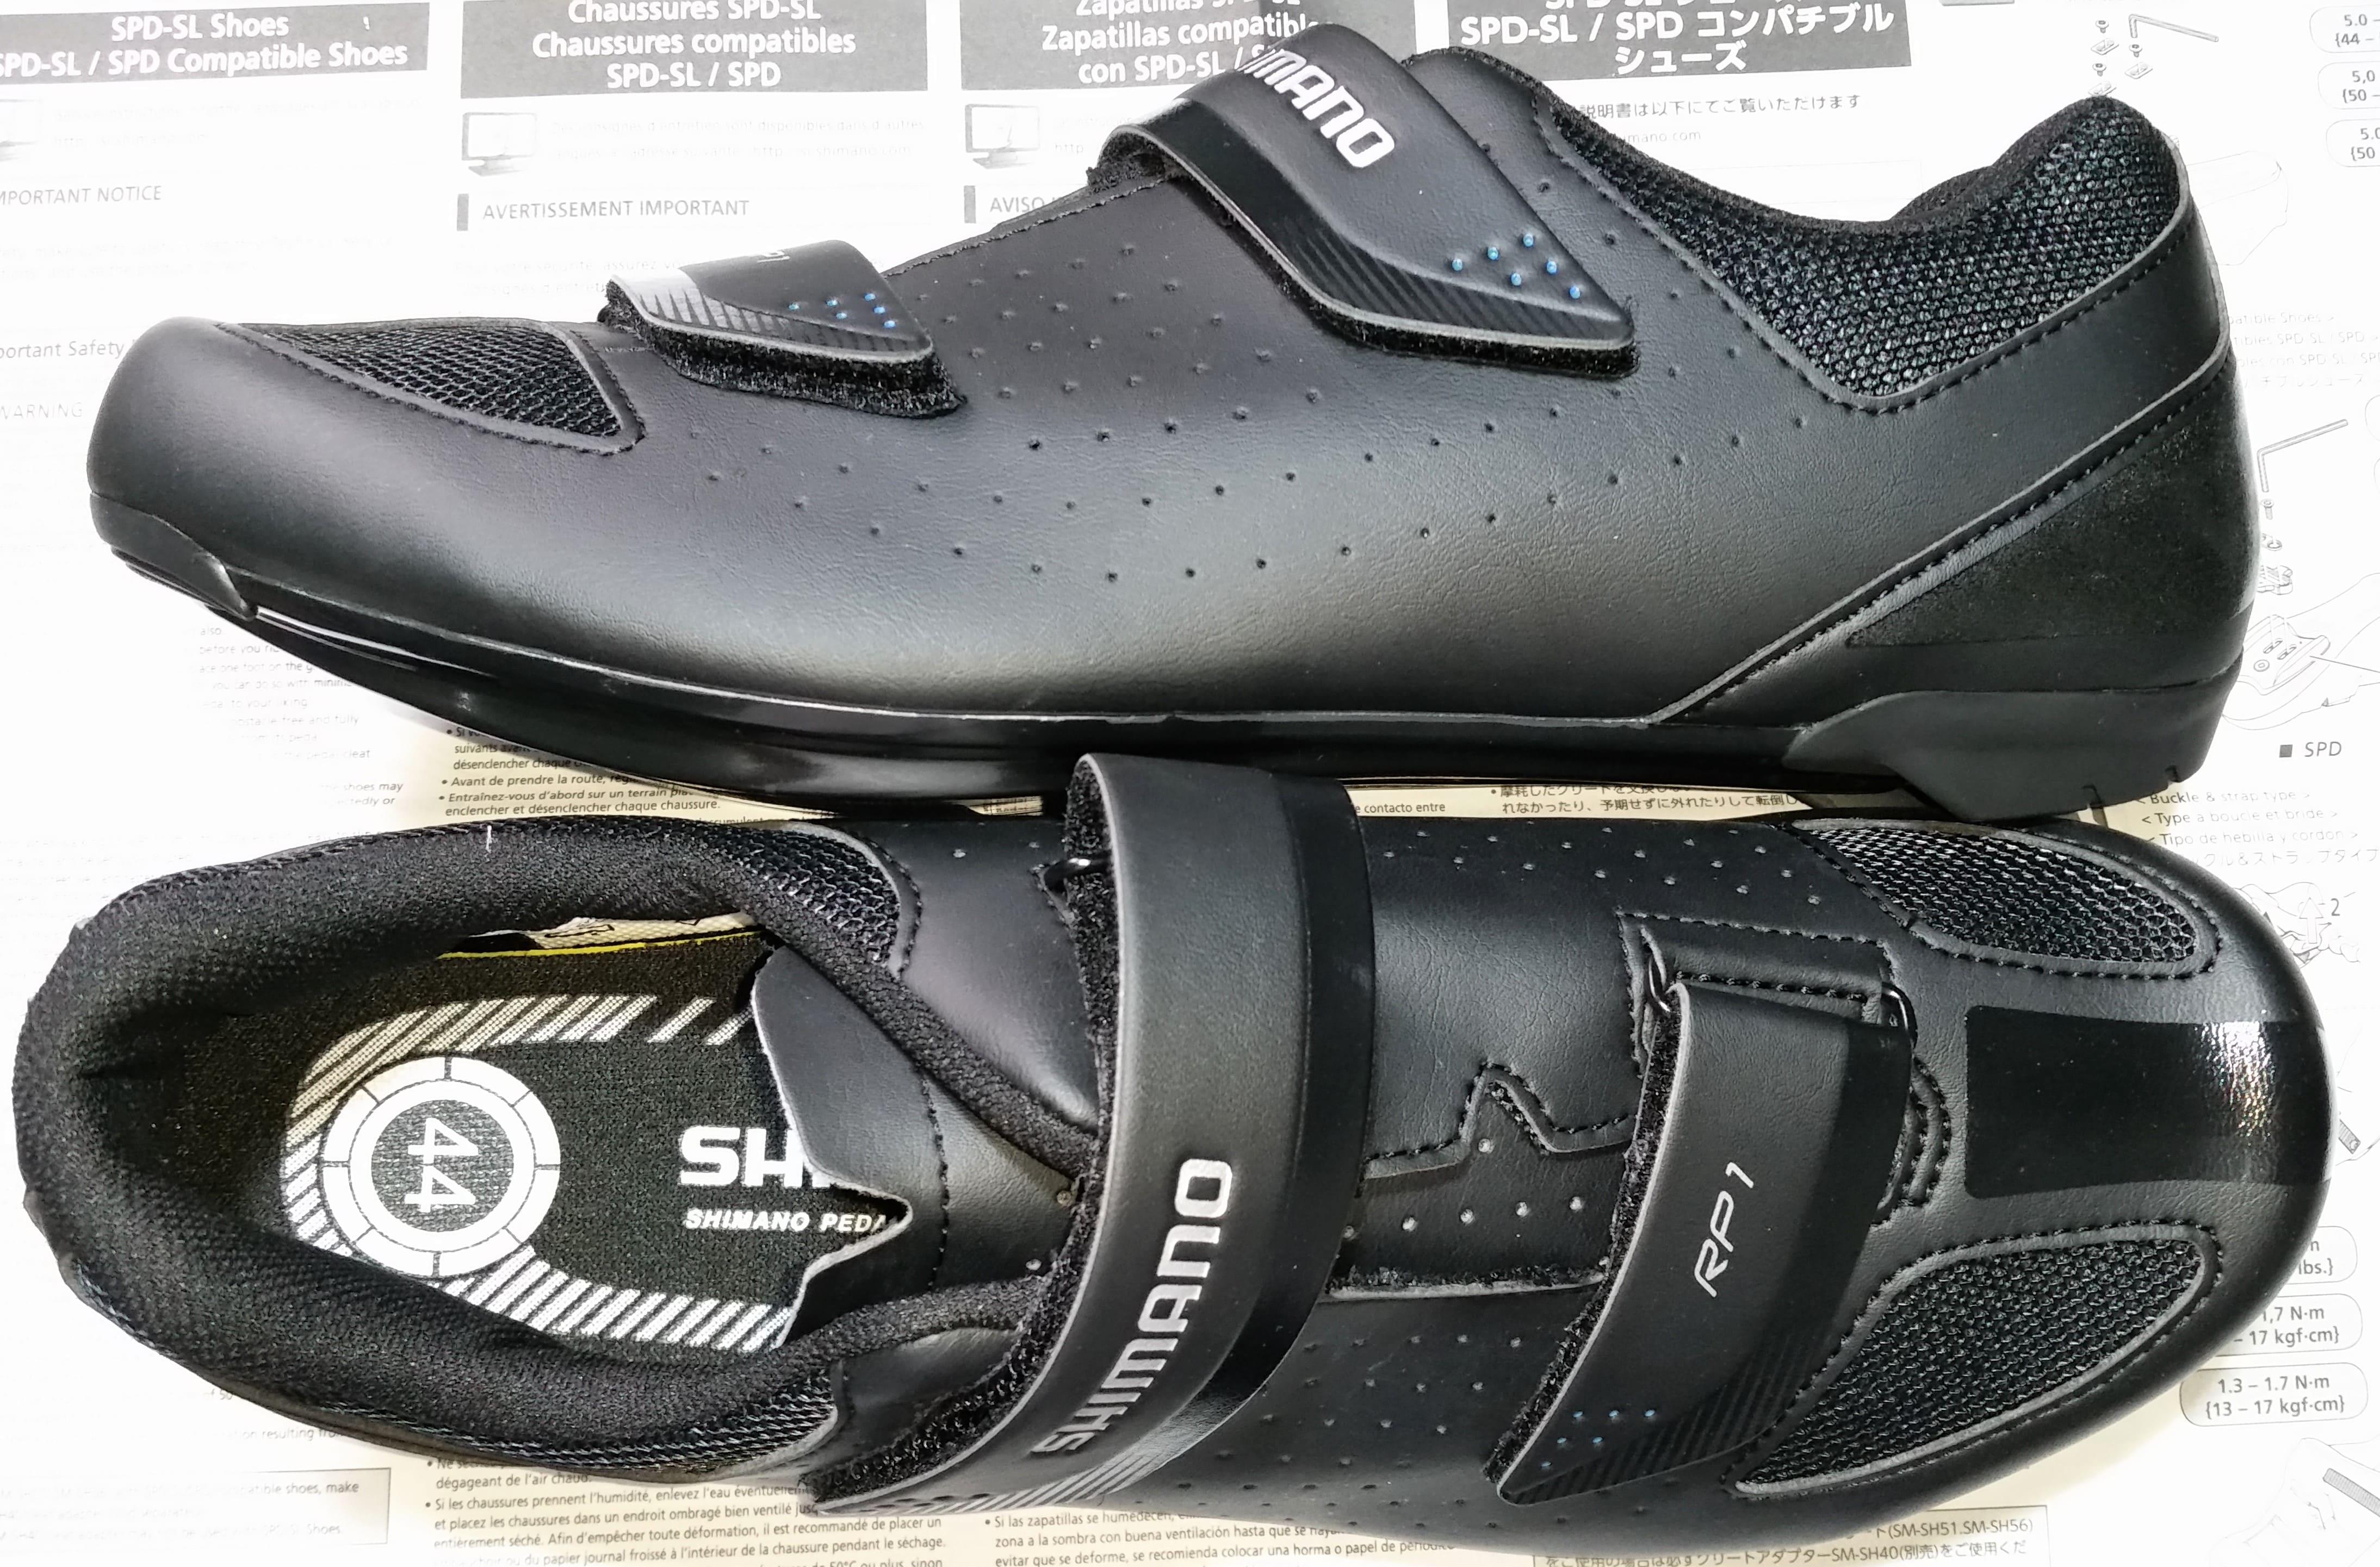 shimano rp1 road cycling shoes